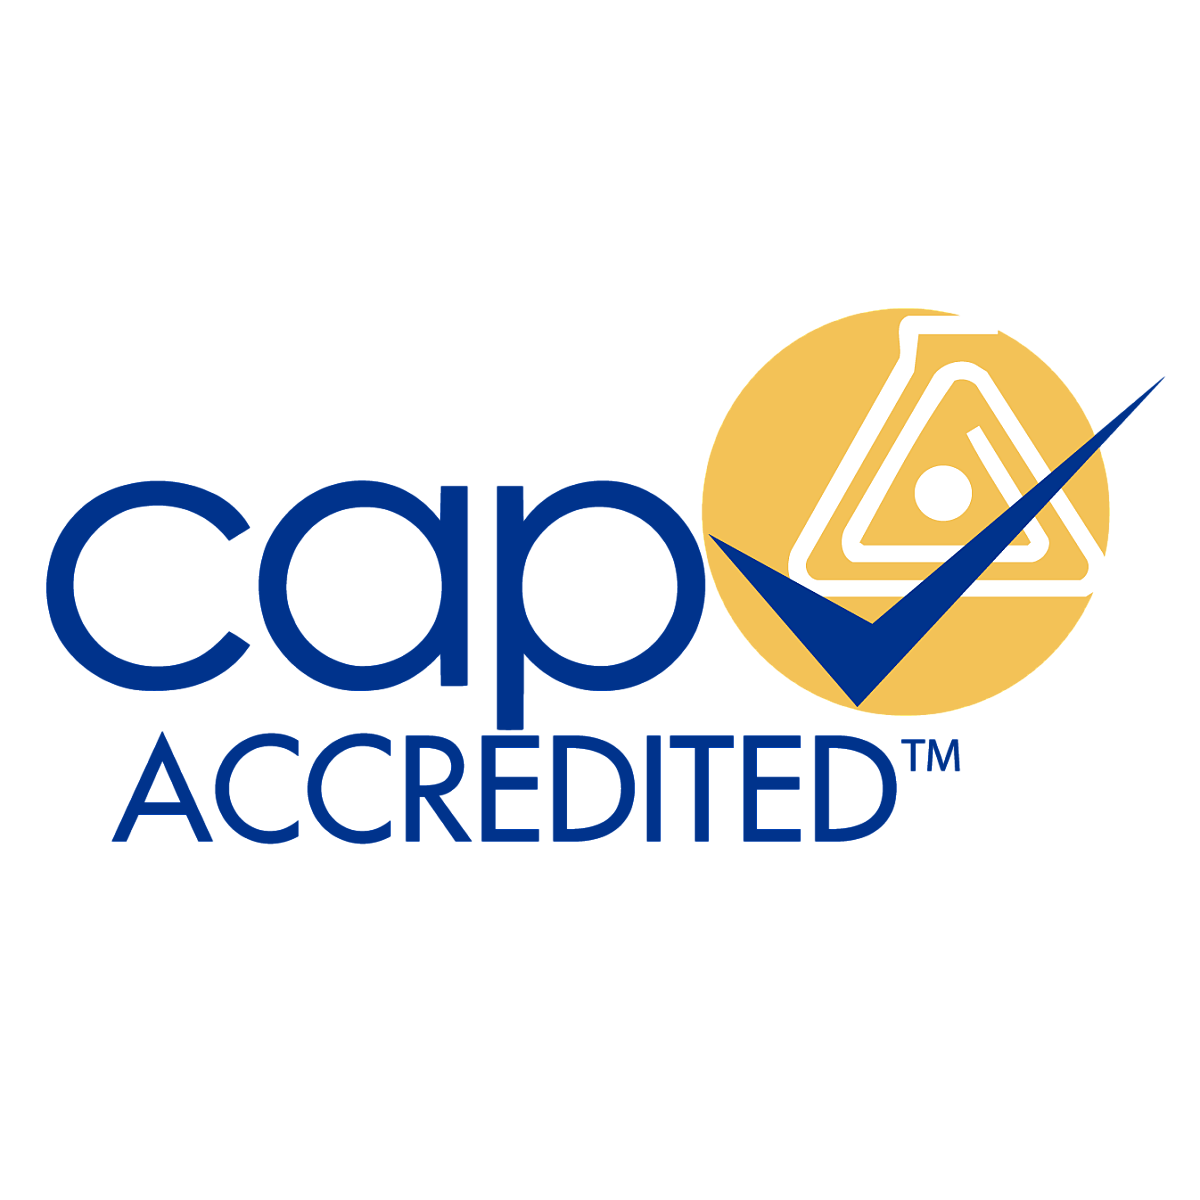 cap accreditation logo